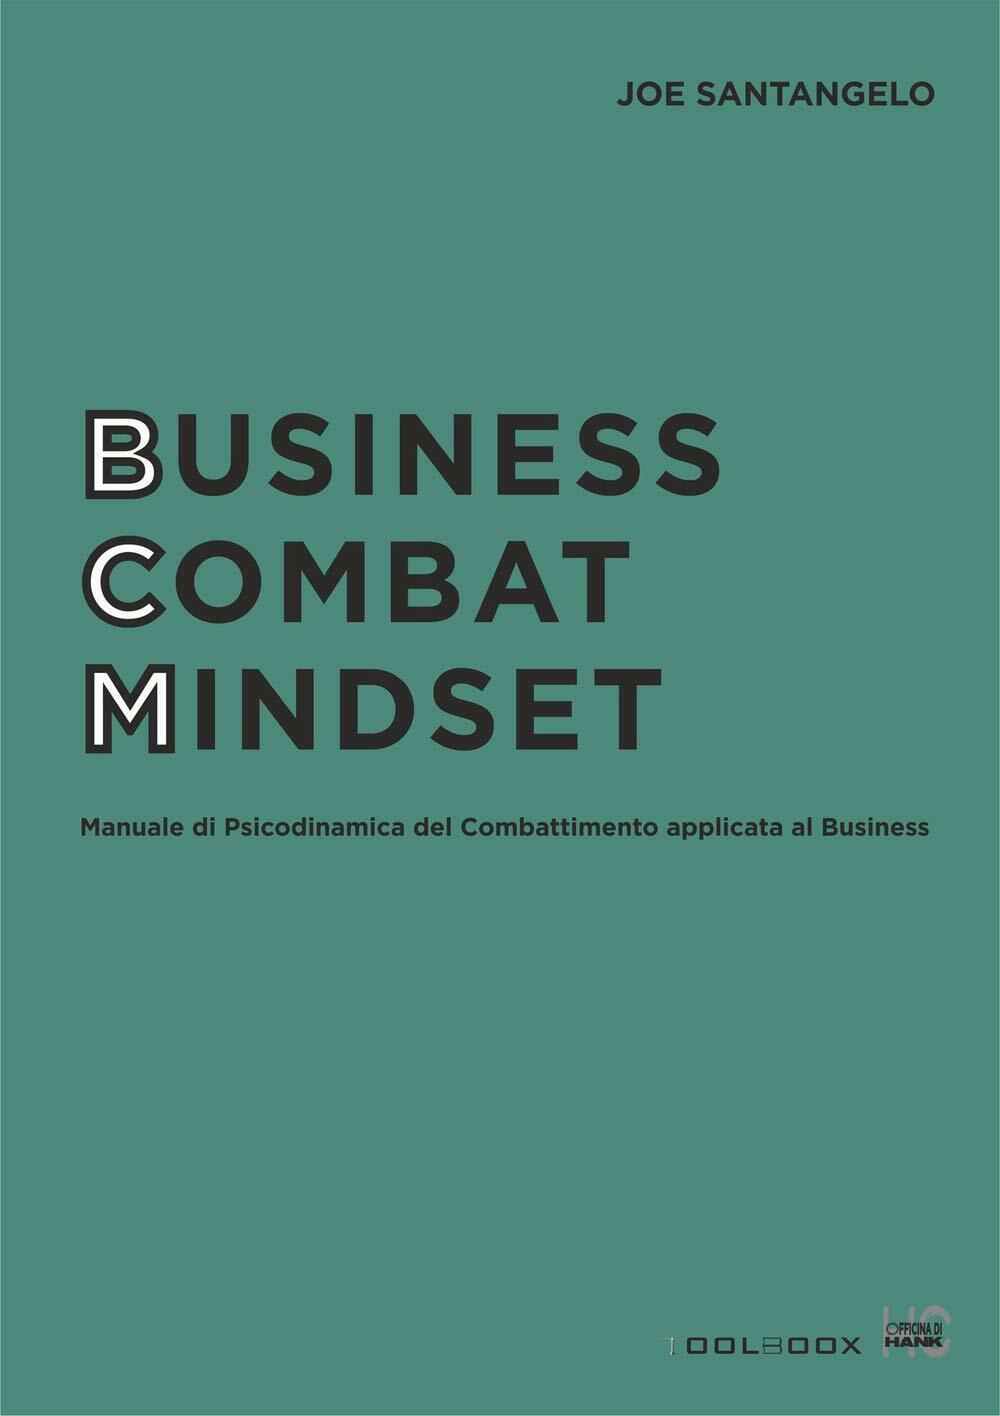 Business combat mindset - Joe Santangelo - Officina di Hank, 2021